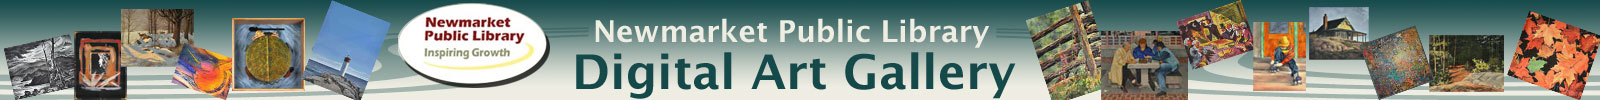 Newmarket Public Library - Digital Art Gallery